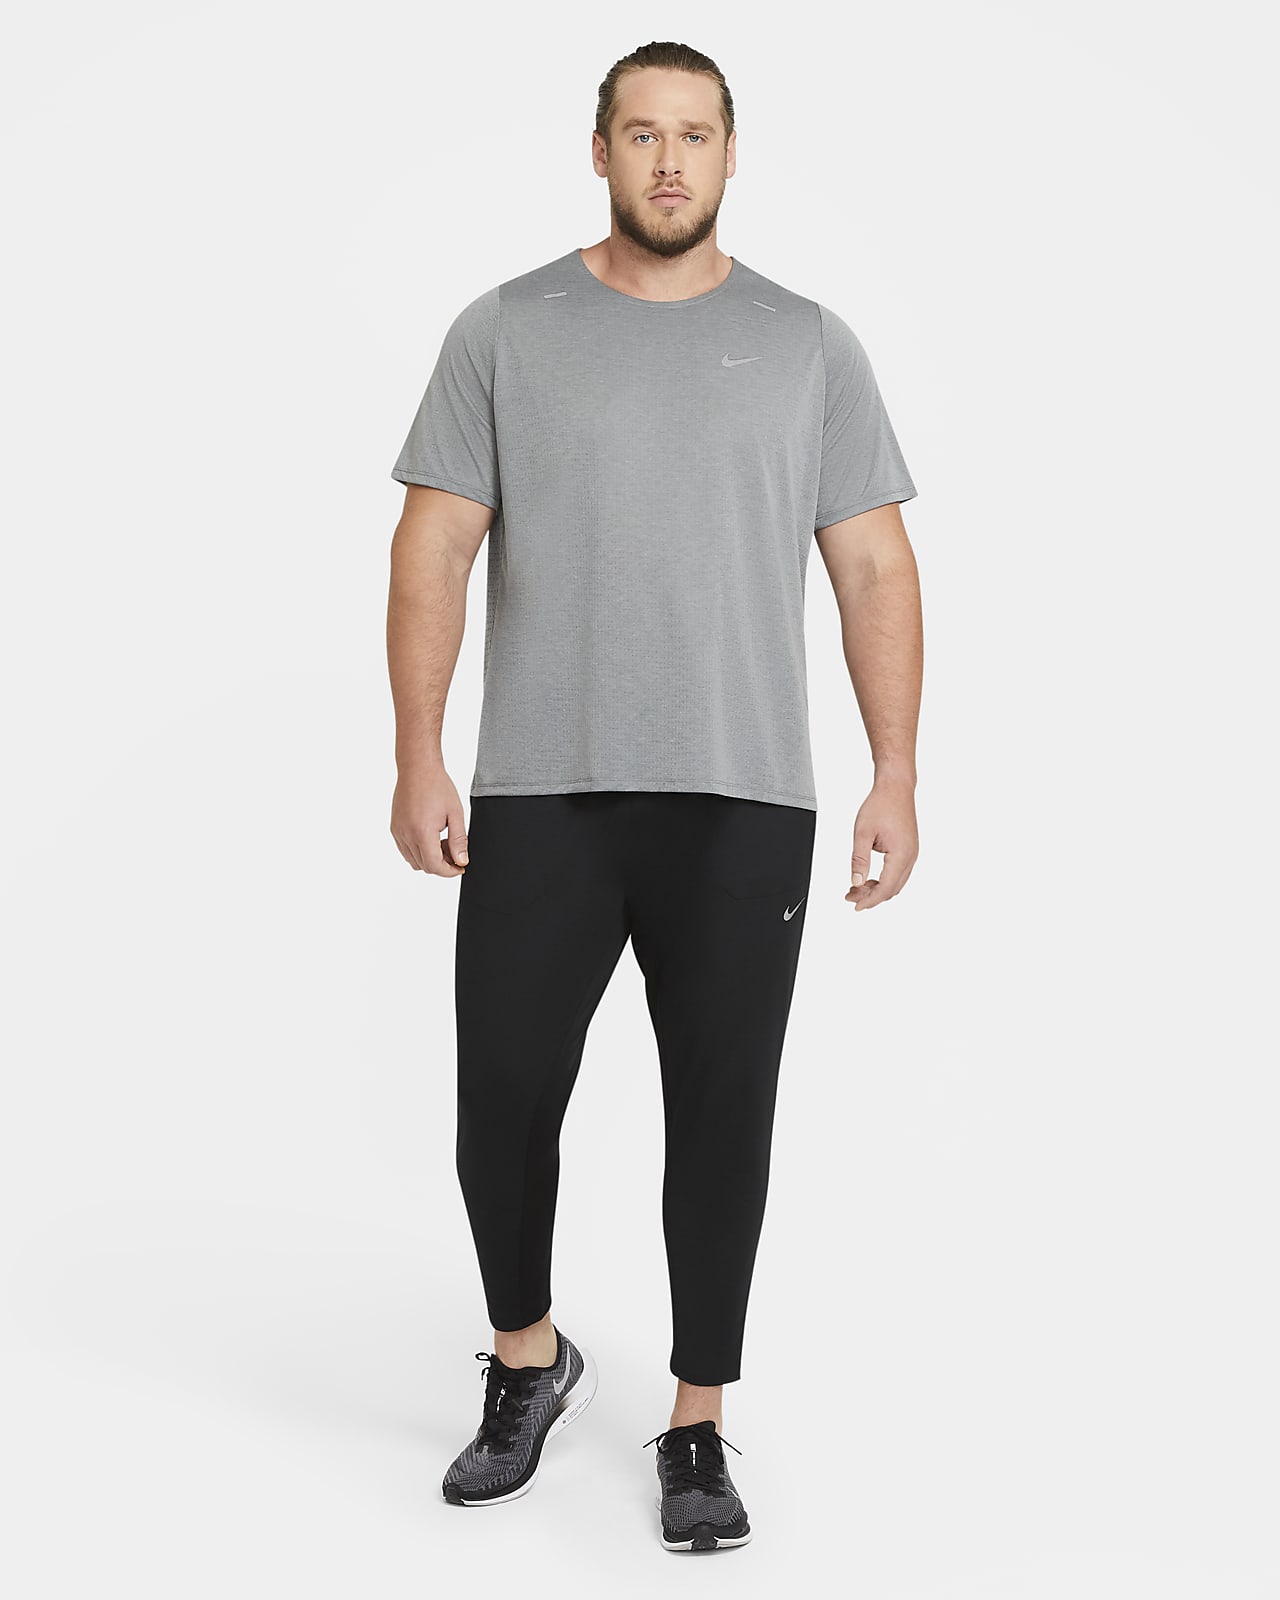 NIKE PHENOM ELITE Men's Size Small Reflective Running Pants Black CU5504-010  $69.97 - PicClick